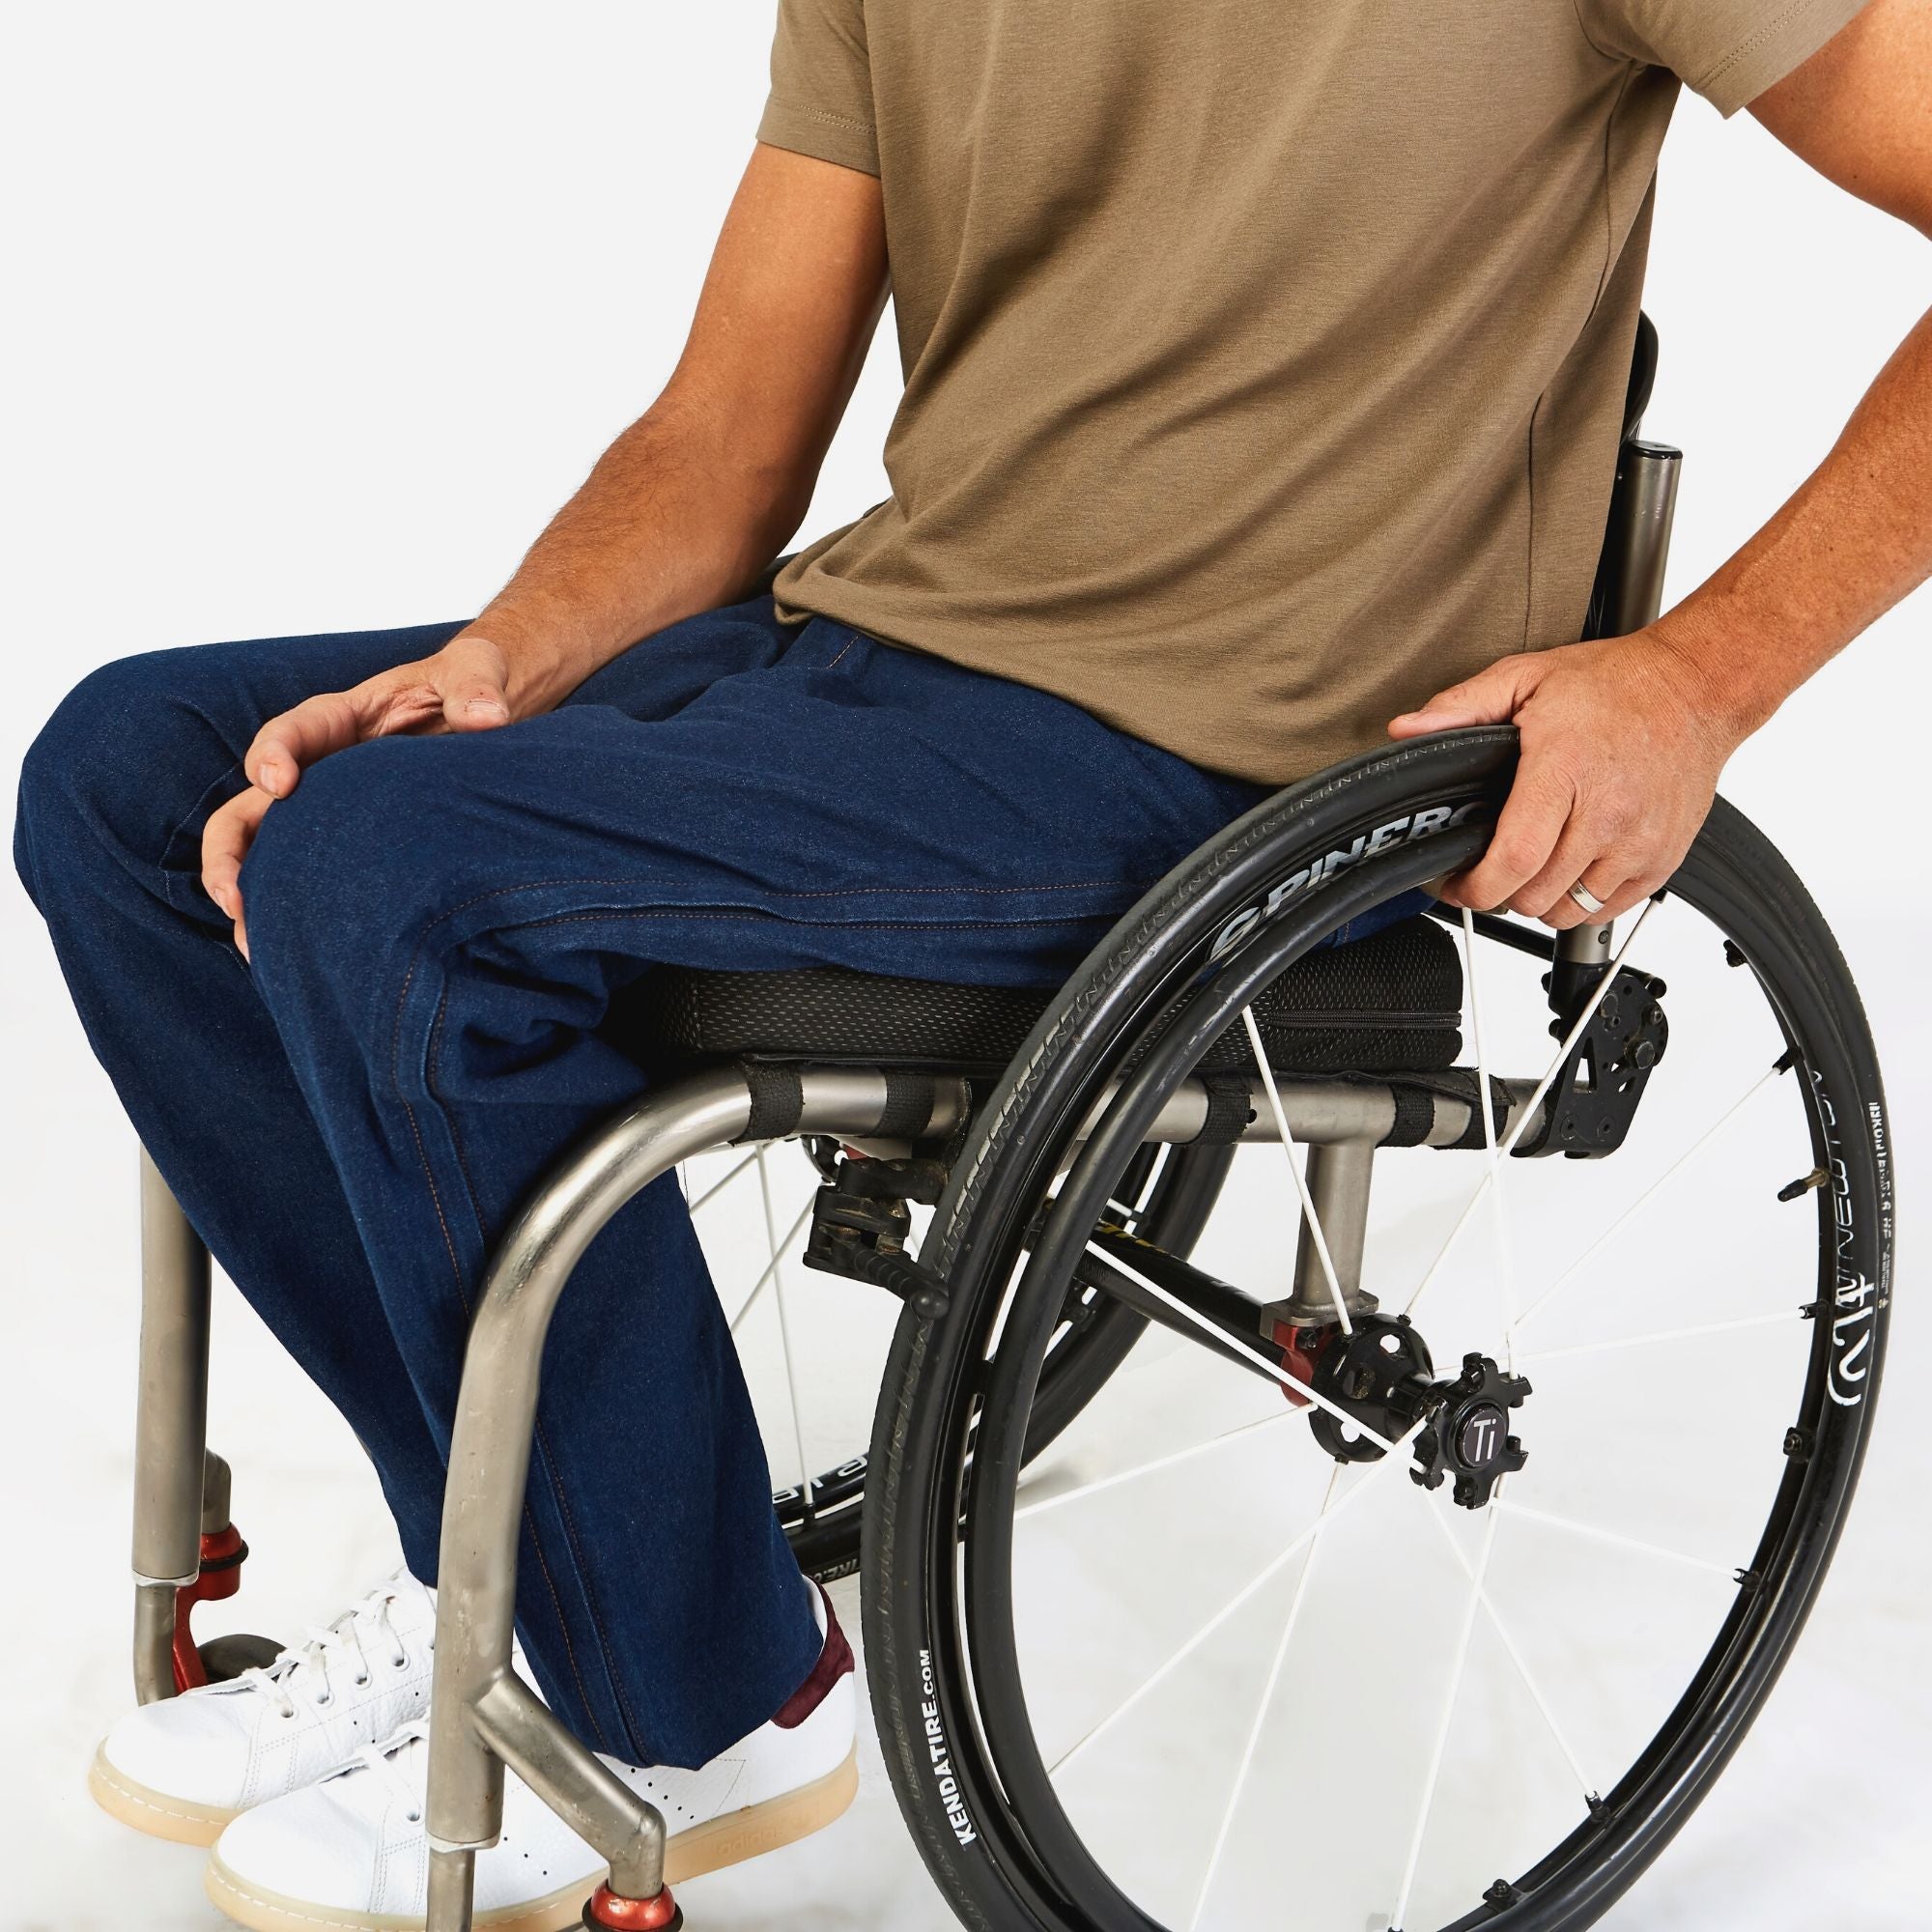 Dundas Side-zip Stretch Jeans in a Wheelchair Cut